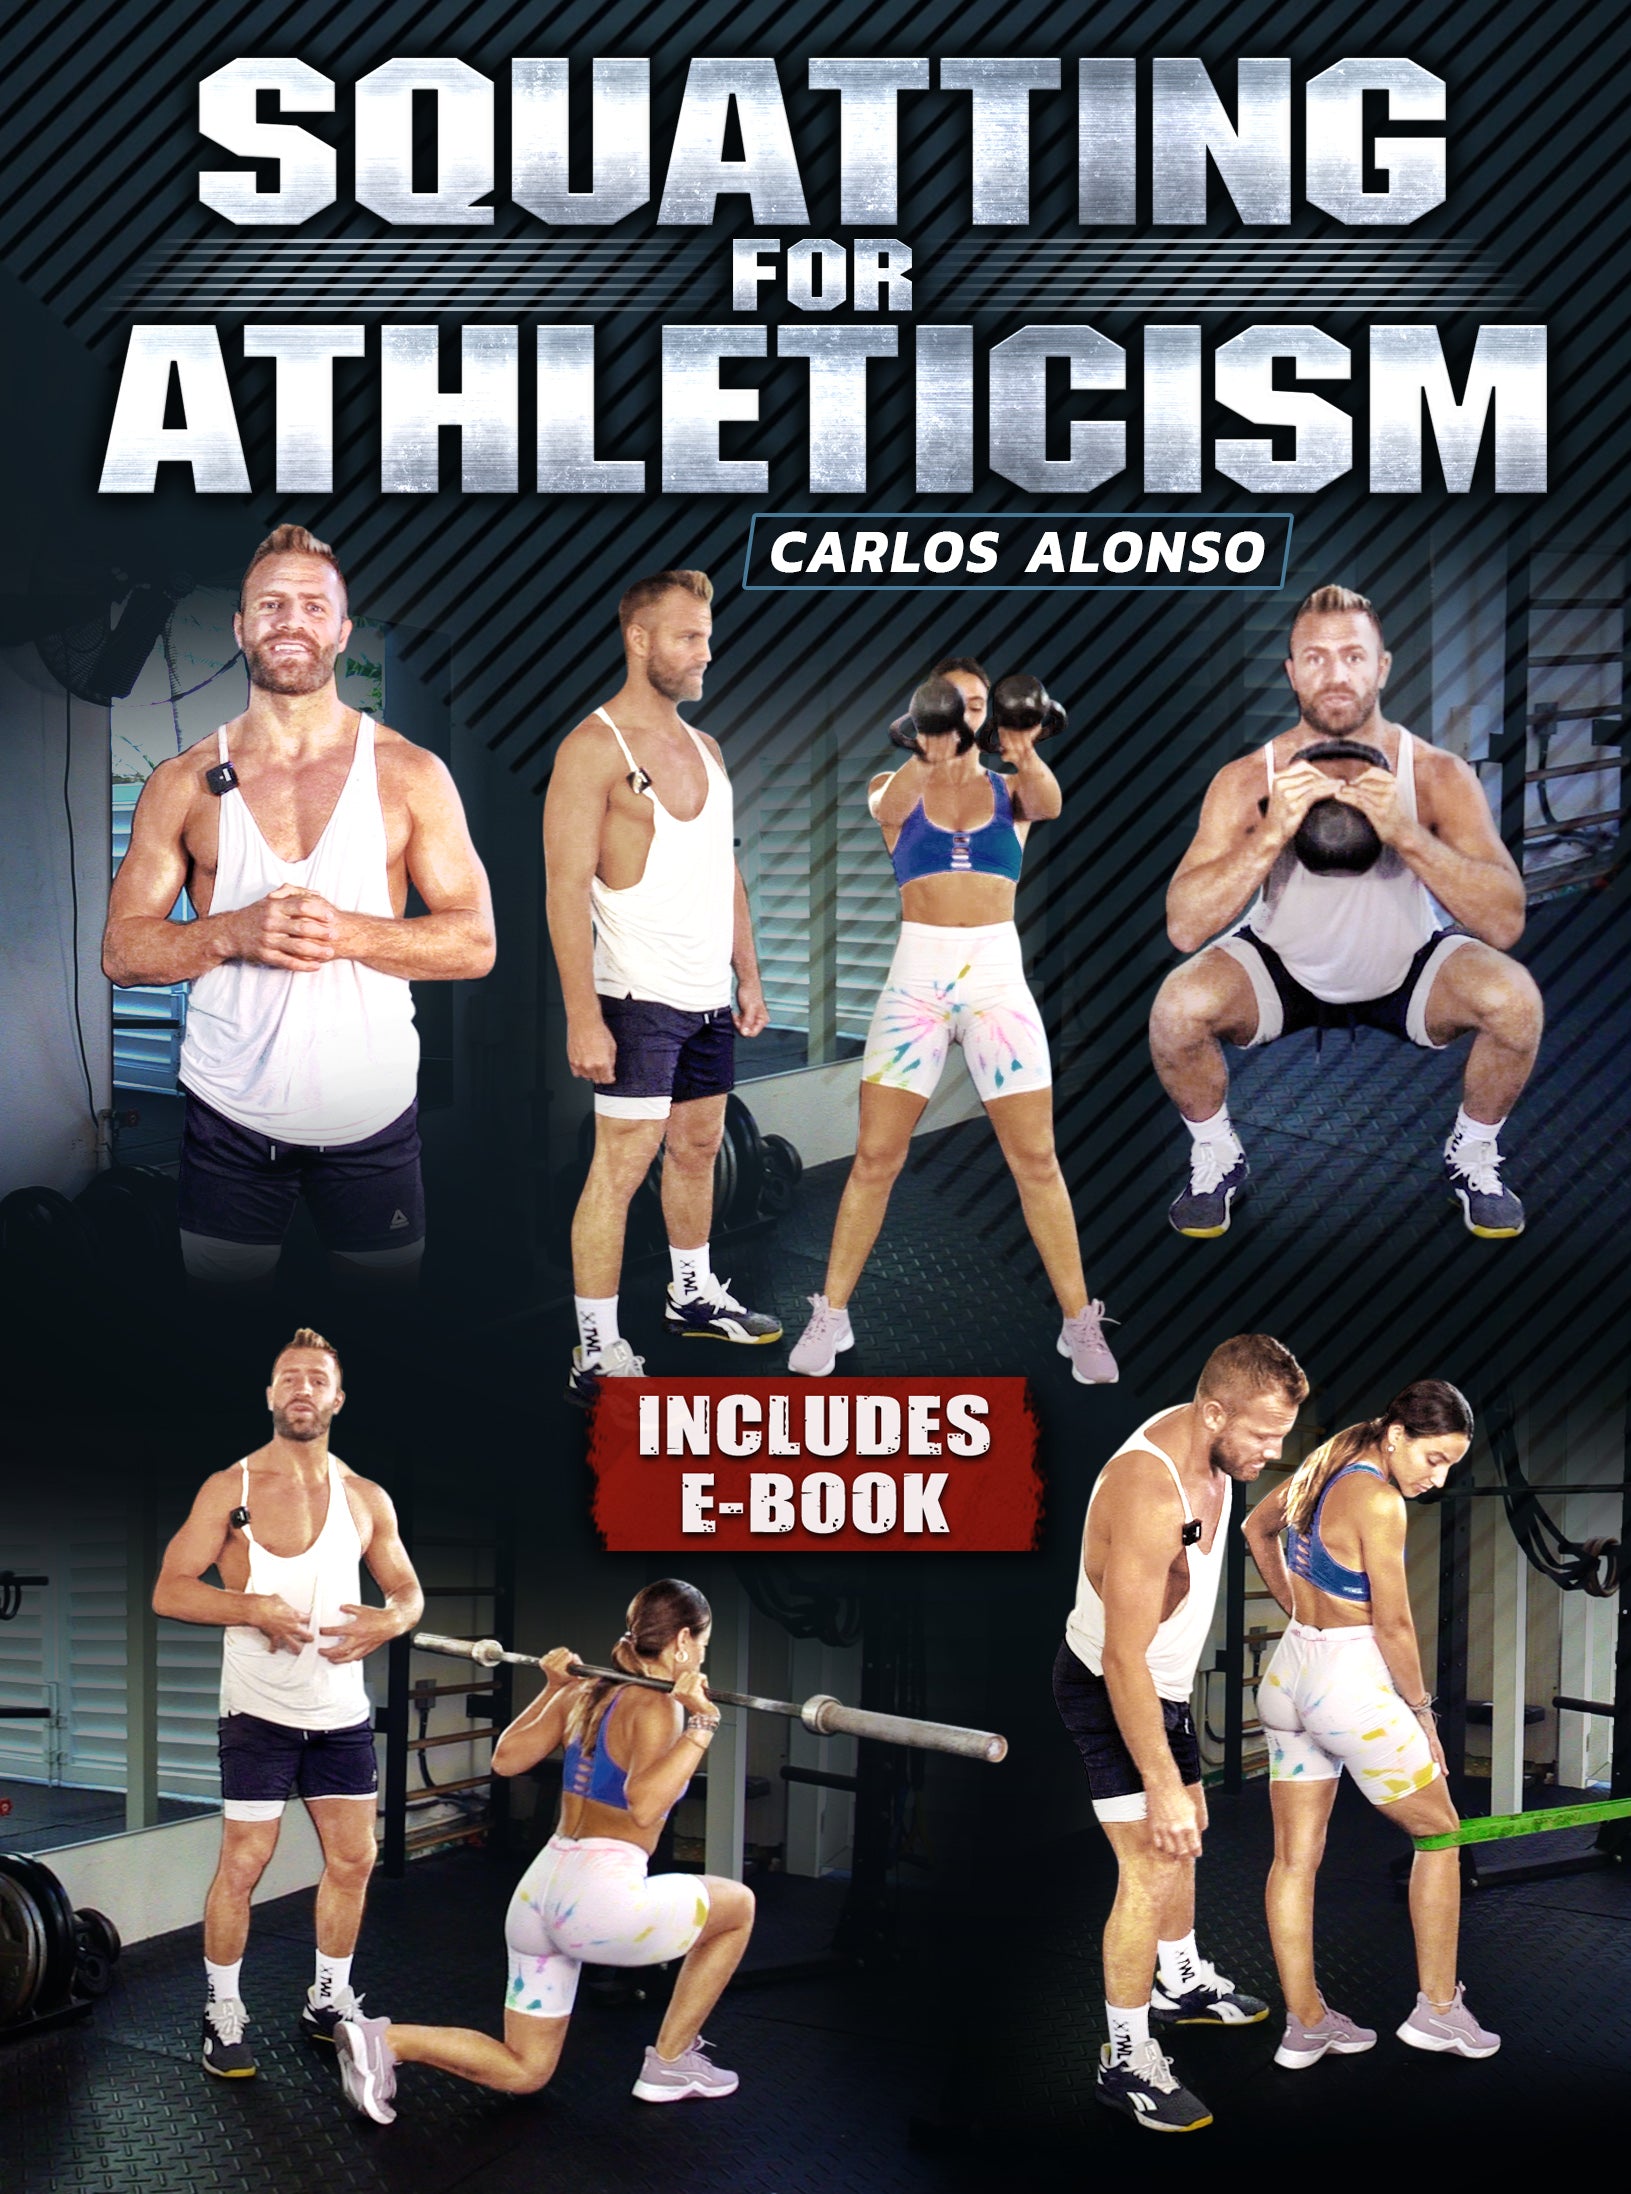 Squatting For Athleticism by Carlos Alonso - Digital